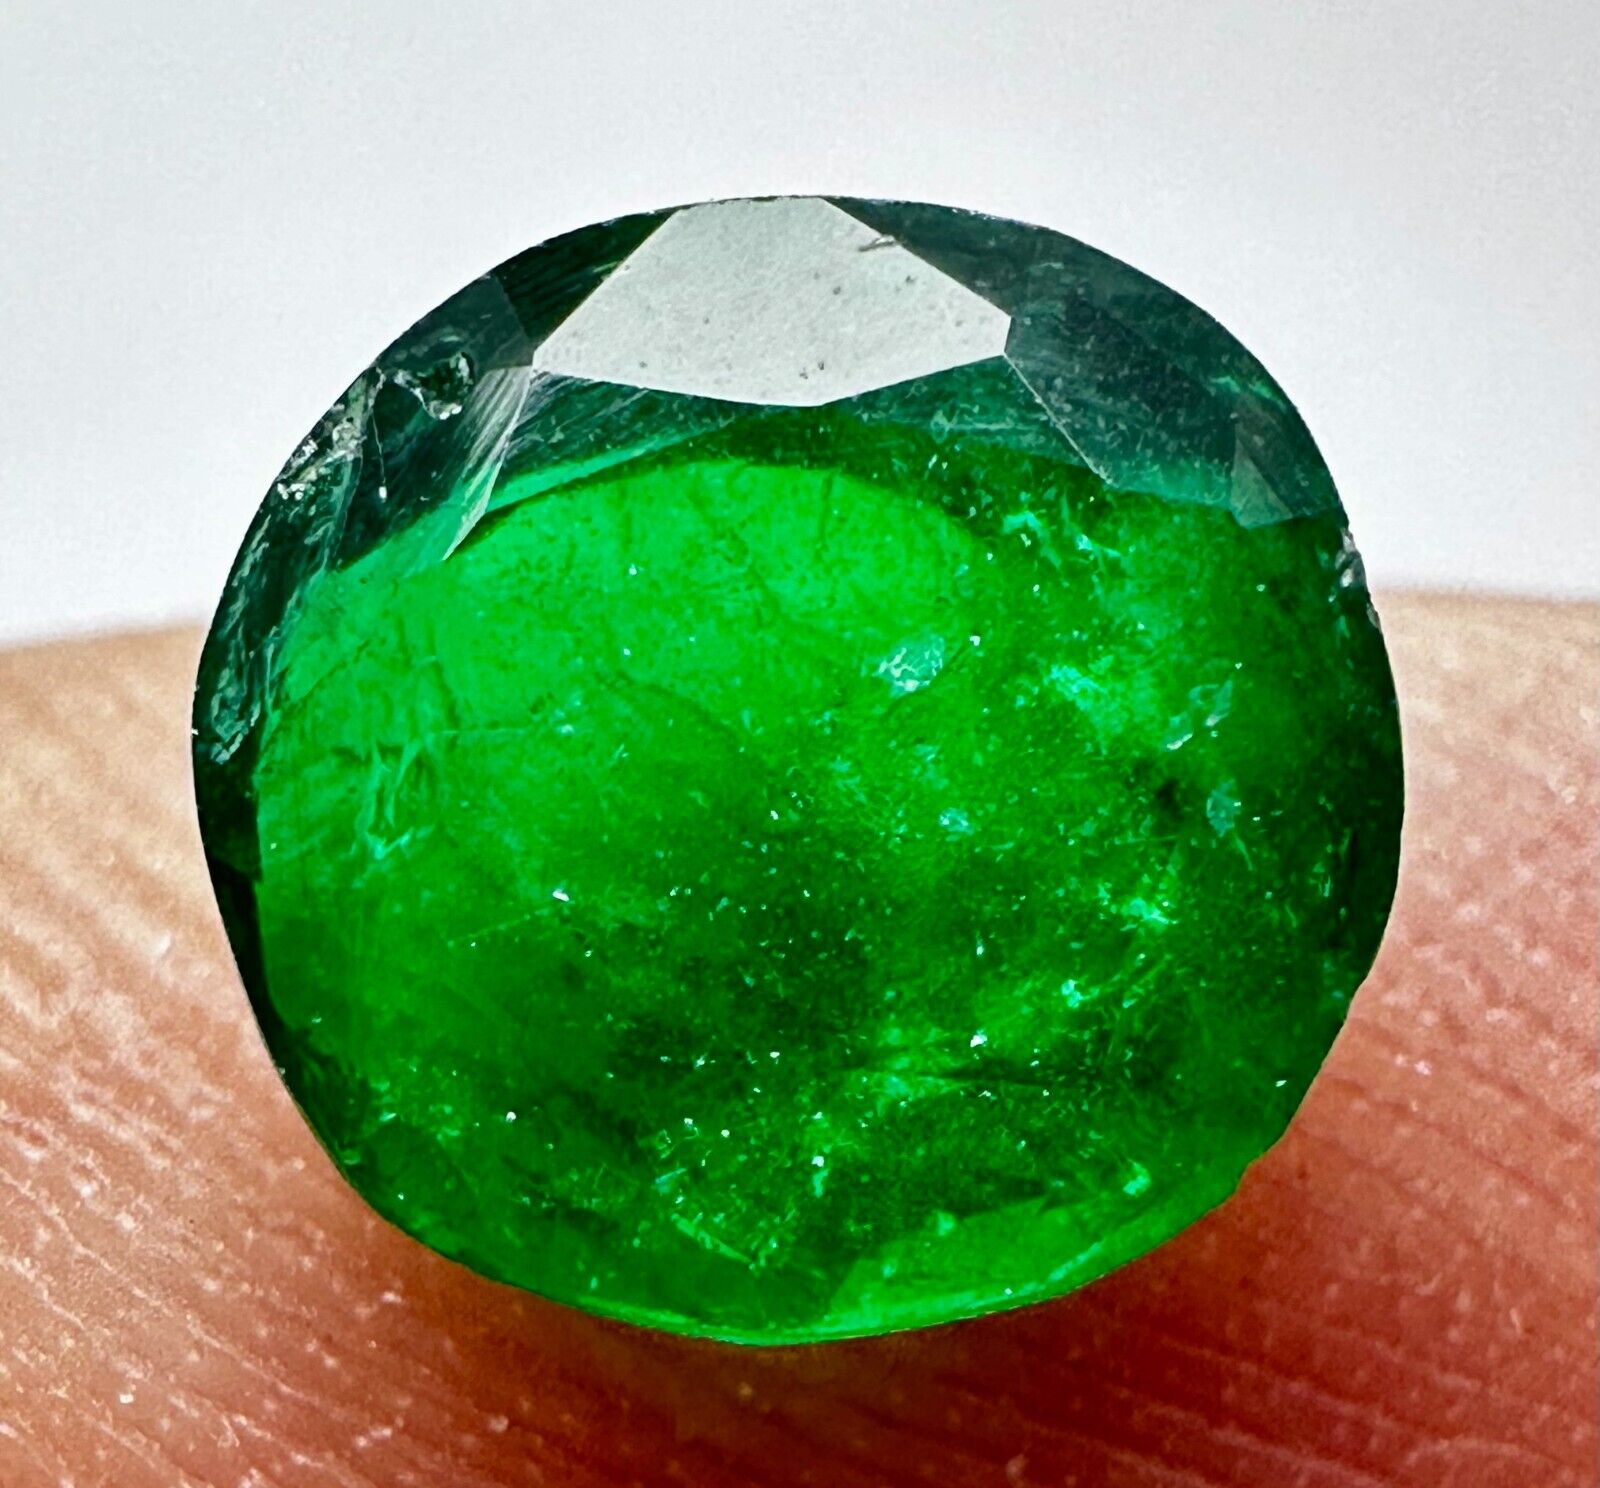 1.1 Ct Natural Transparent Top Green Swat Emerald Cut Gemstone From Pakistan.